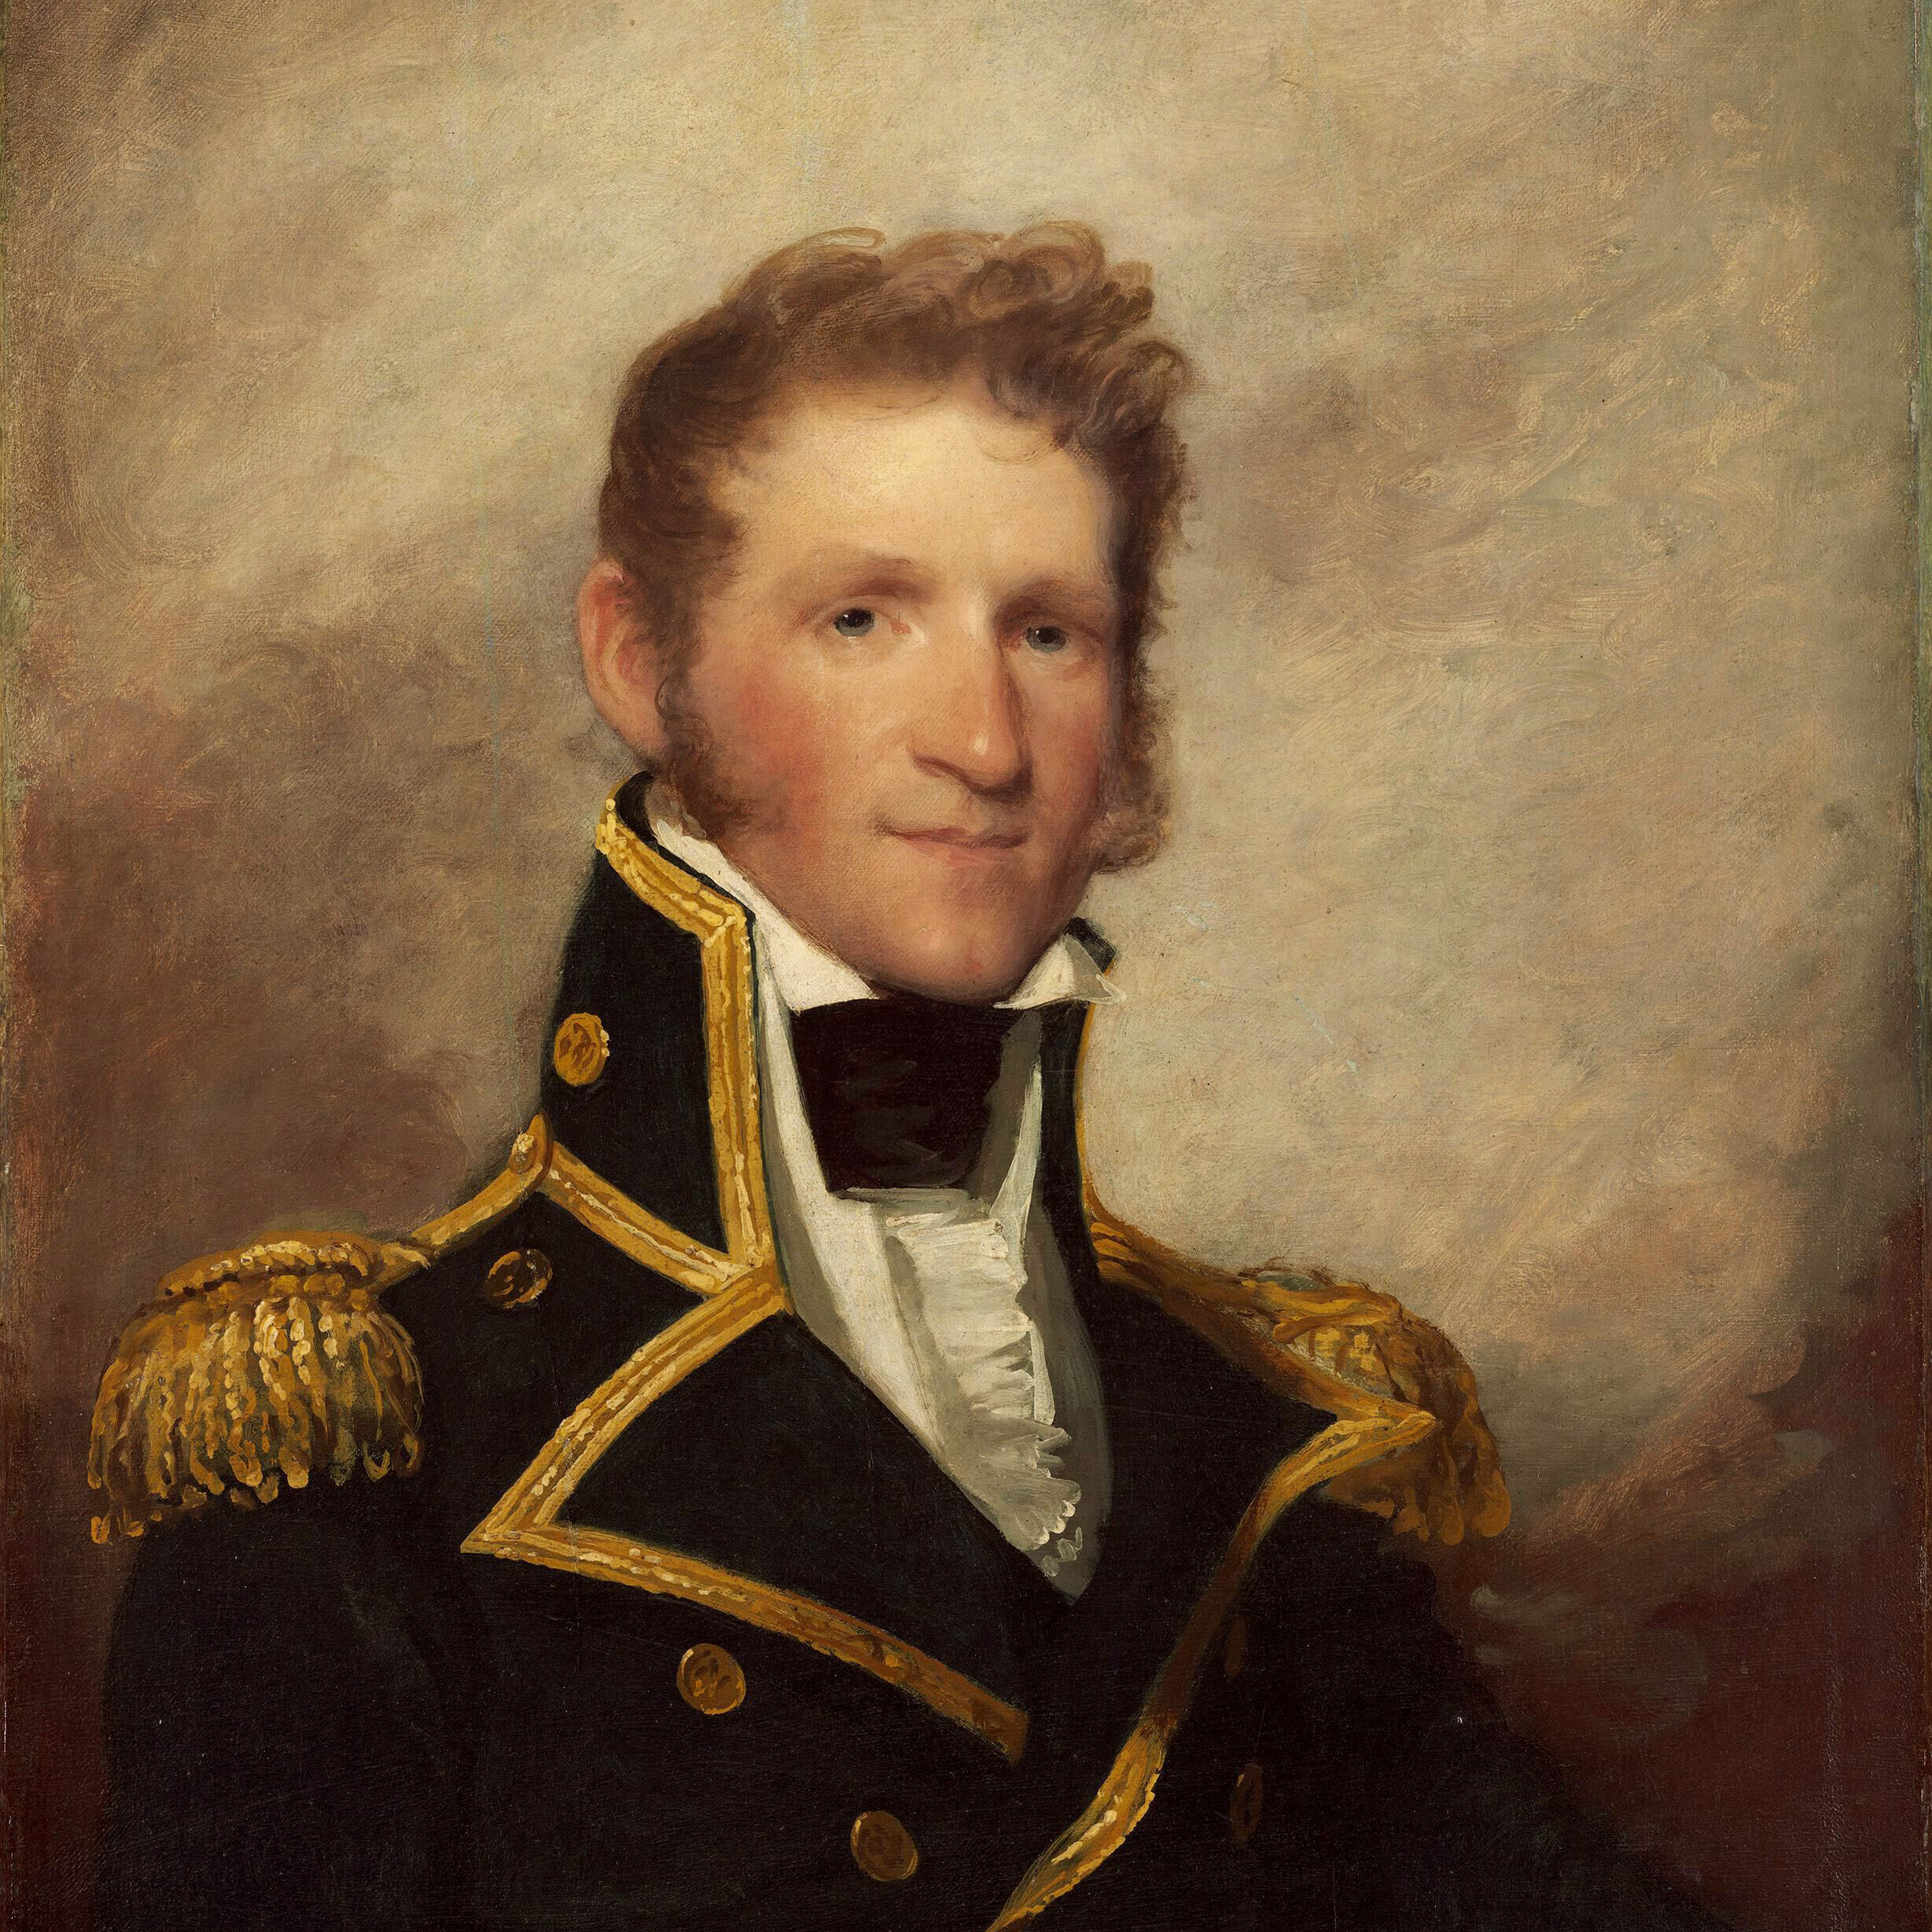 portrait of Commodore Thomas Macdonough